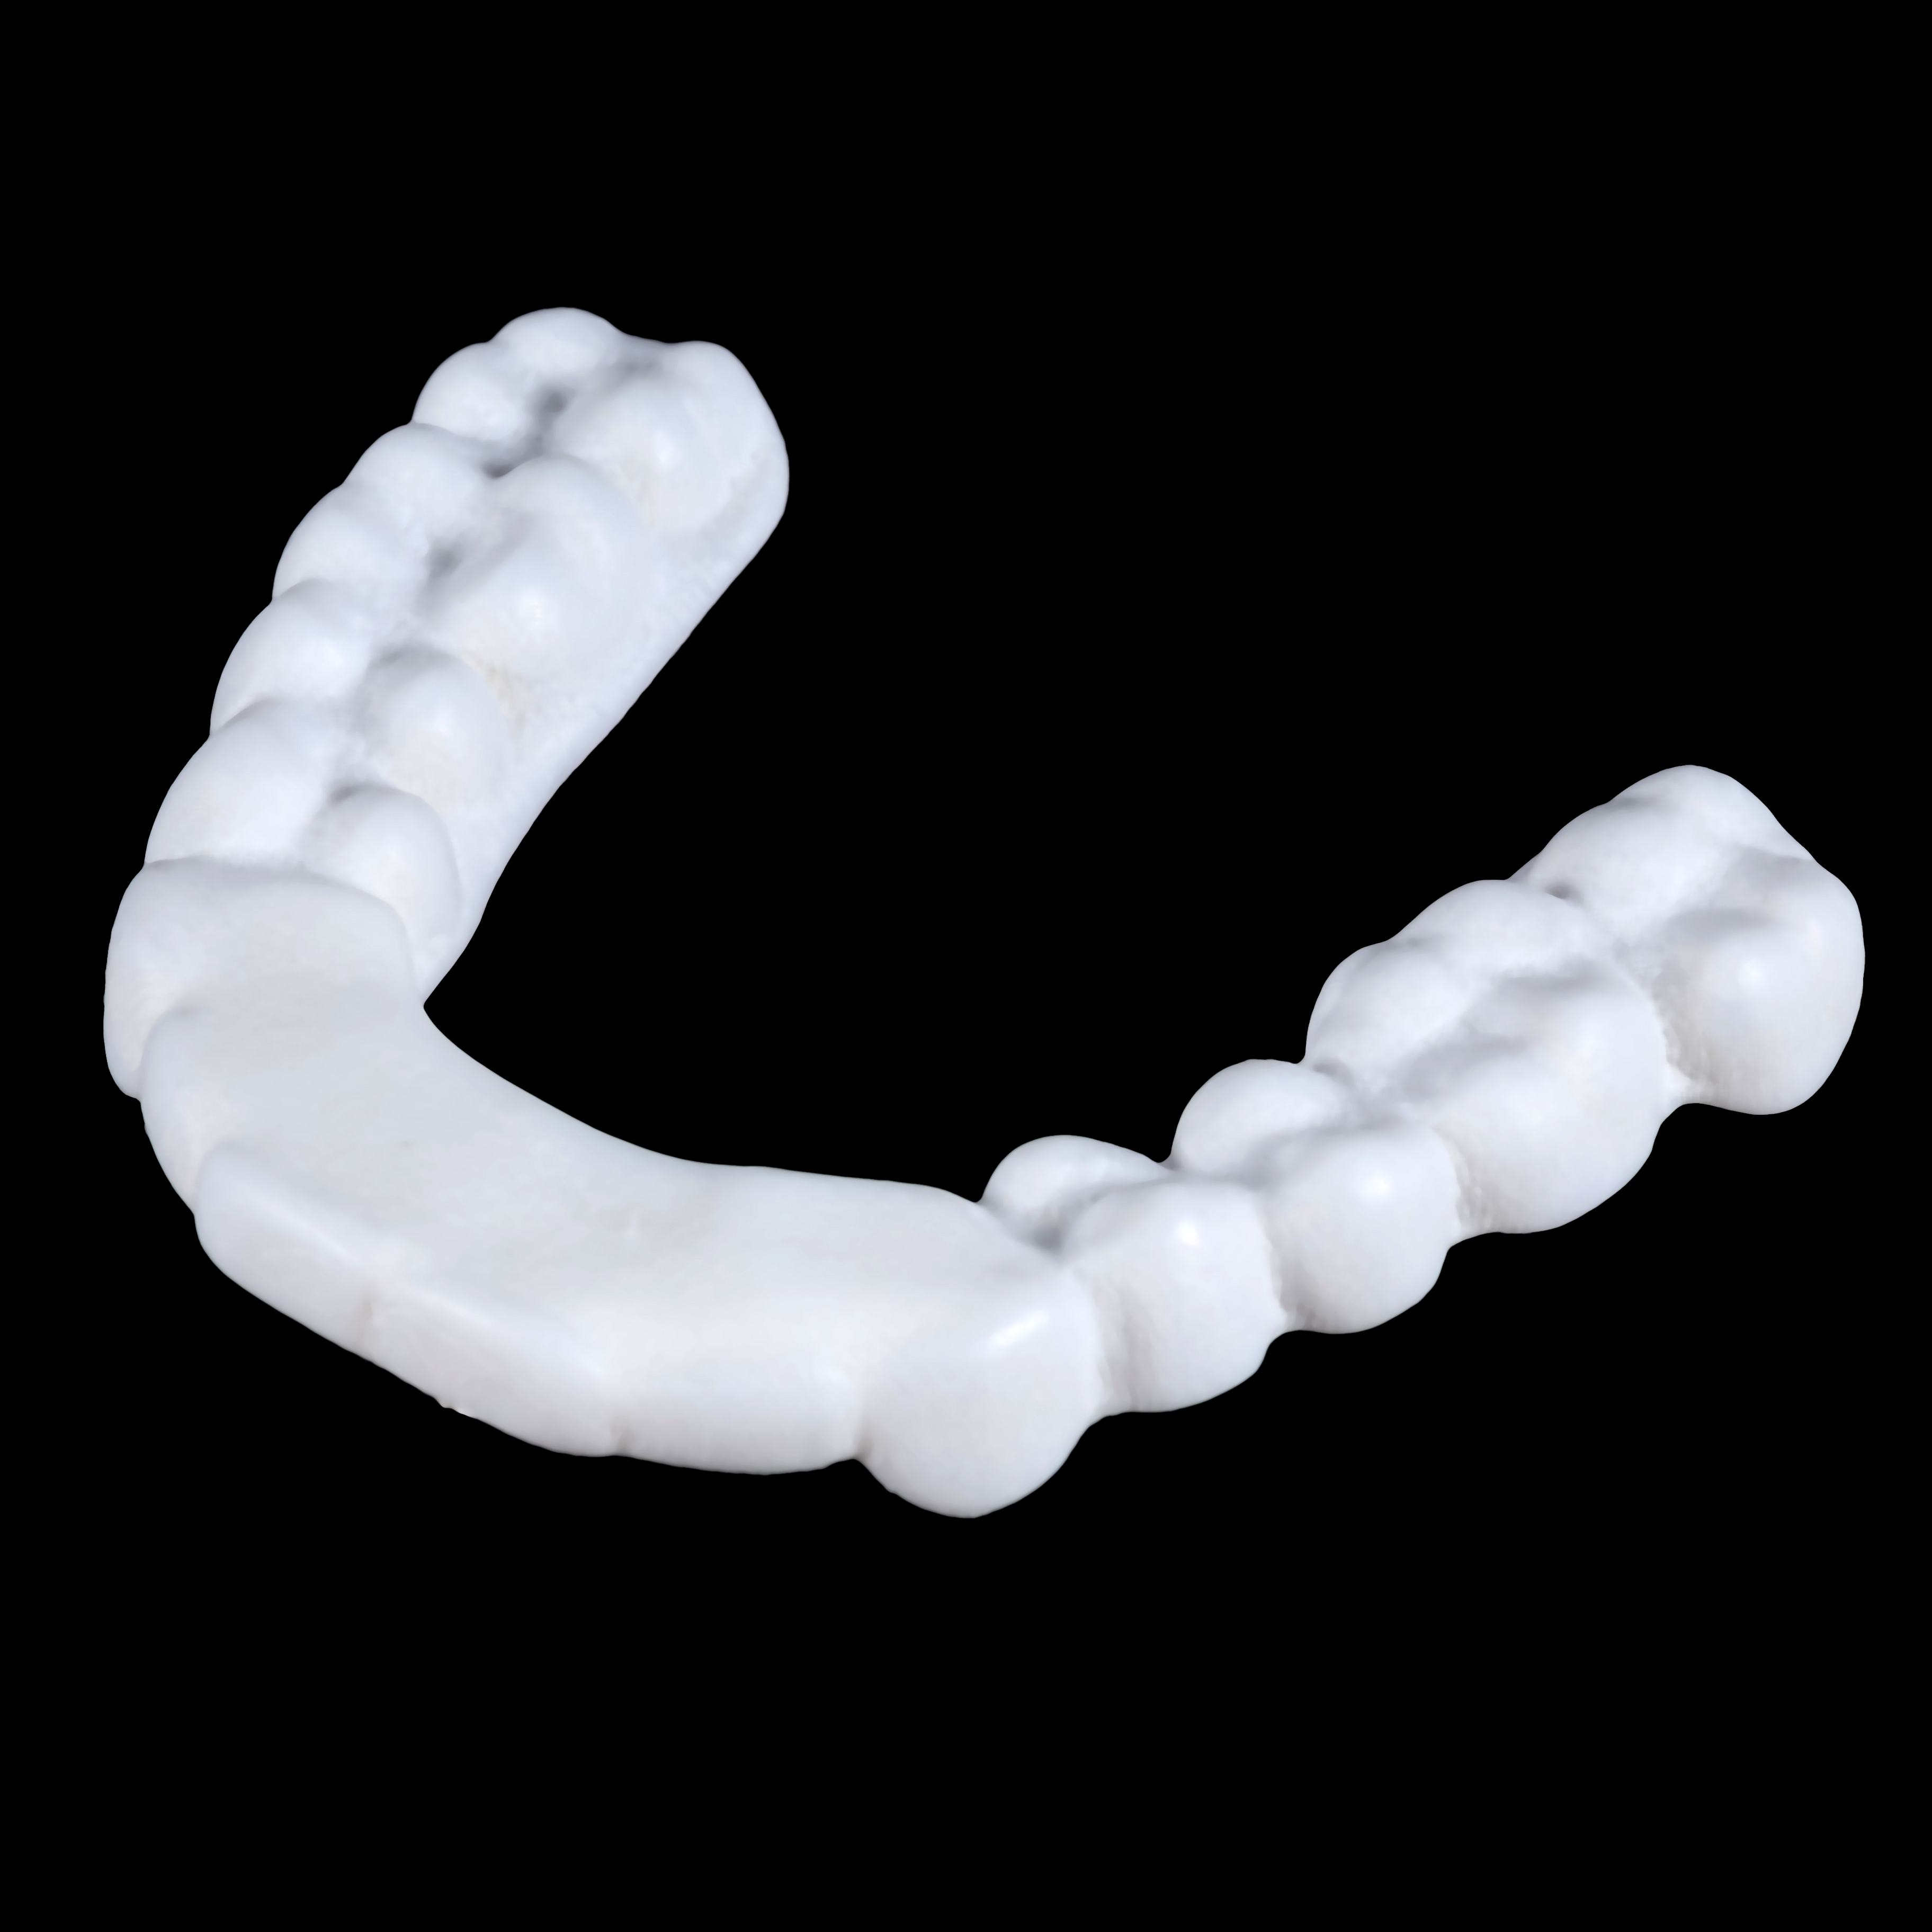 SLS 3D Printed Dental Part. Photo via PostProcess Technologies.